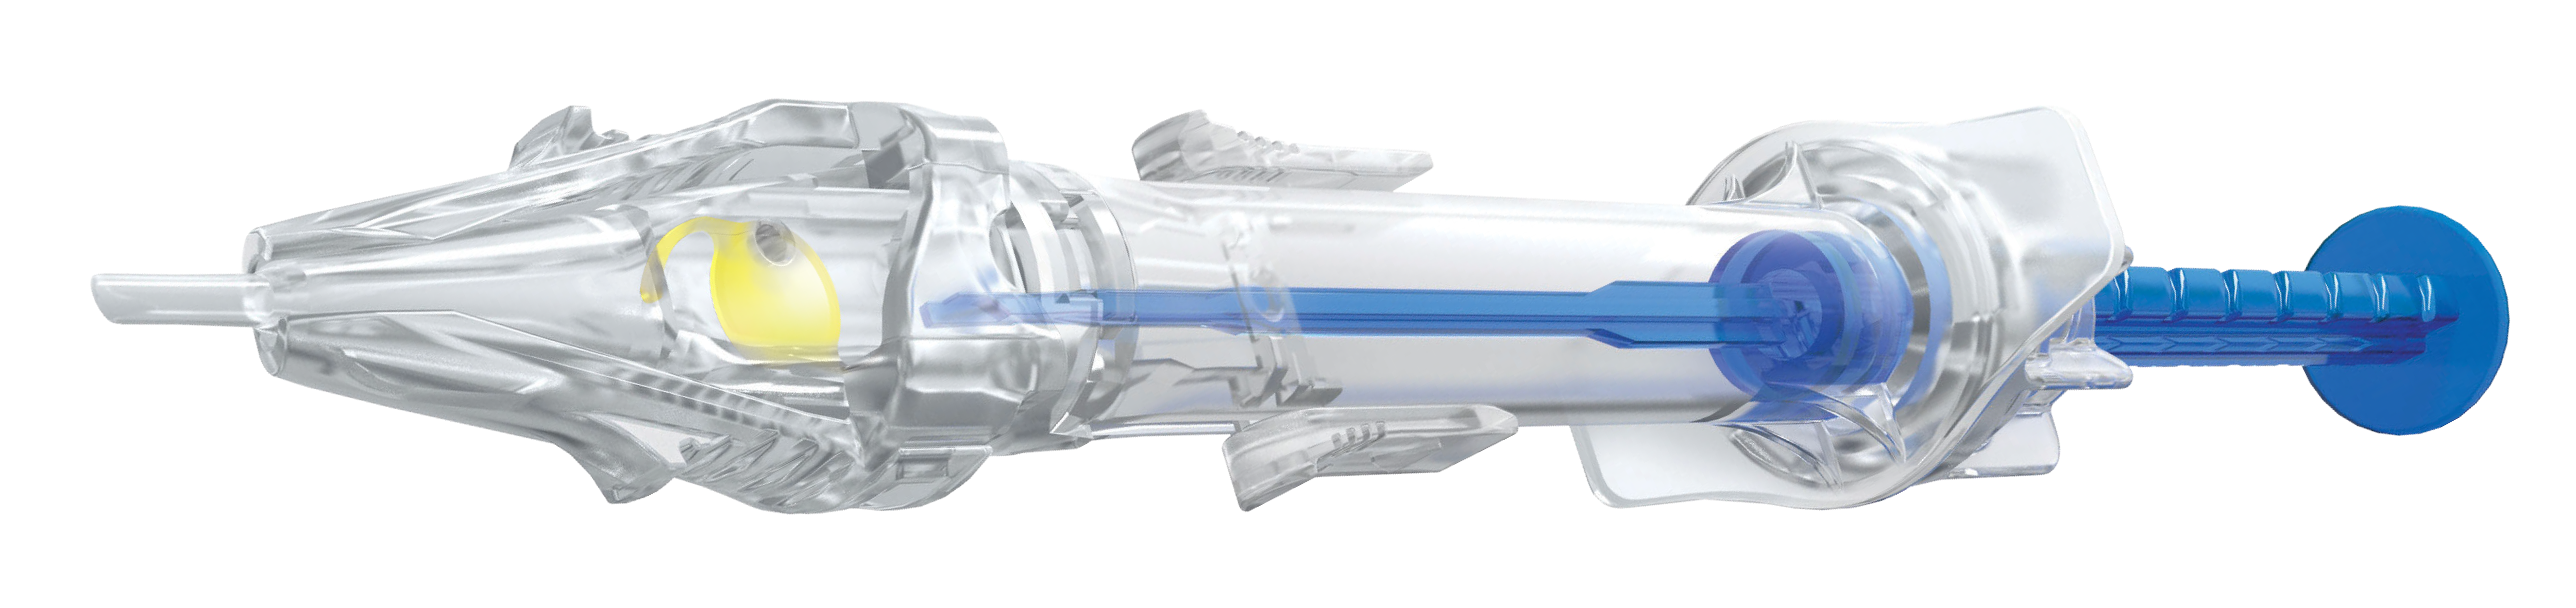 Hoya surgical optics Vivinex multiSert injector